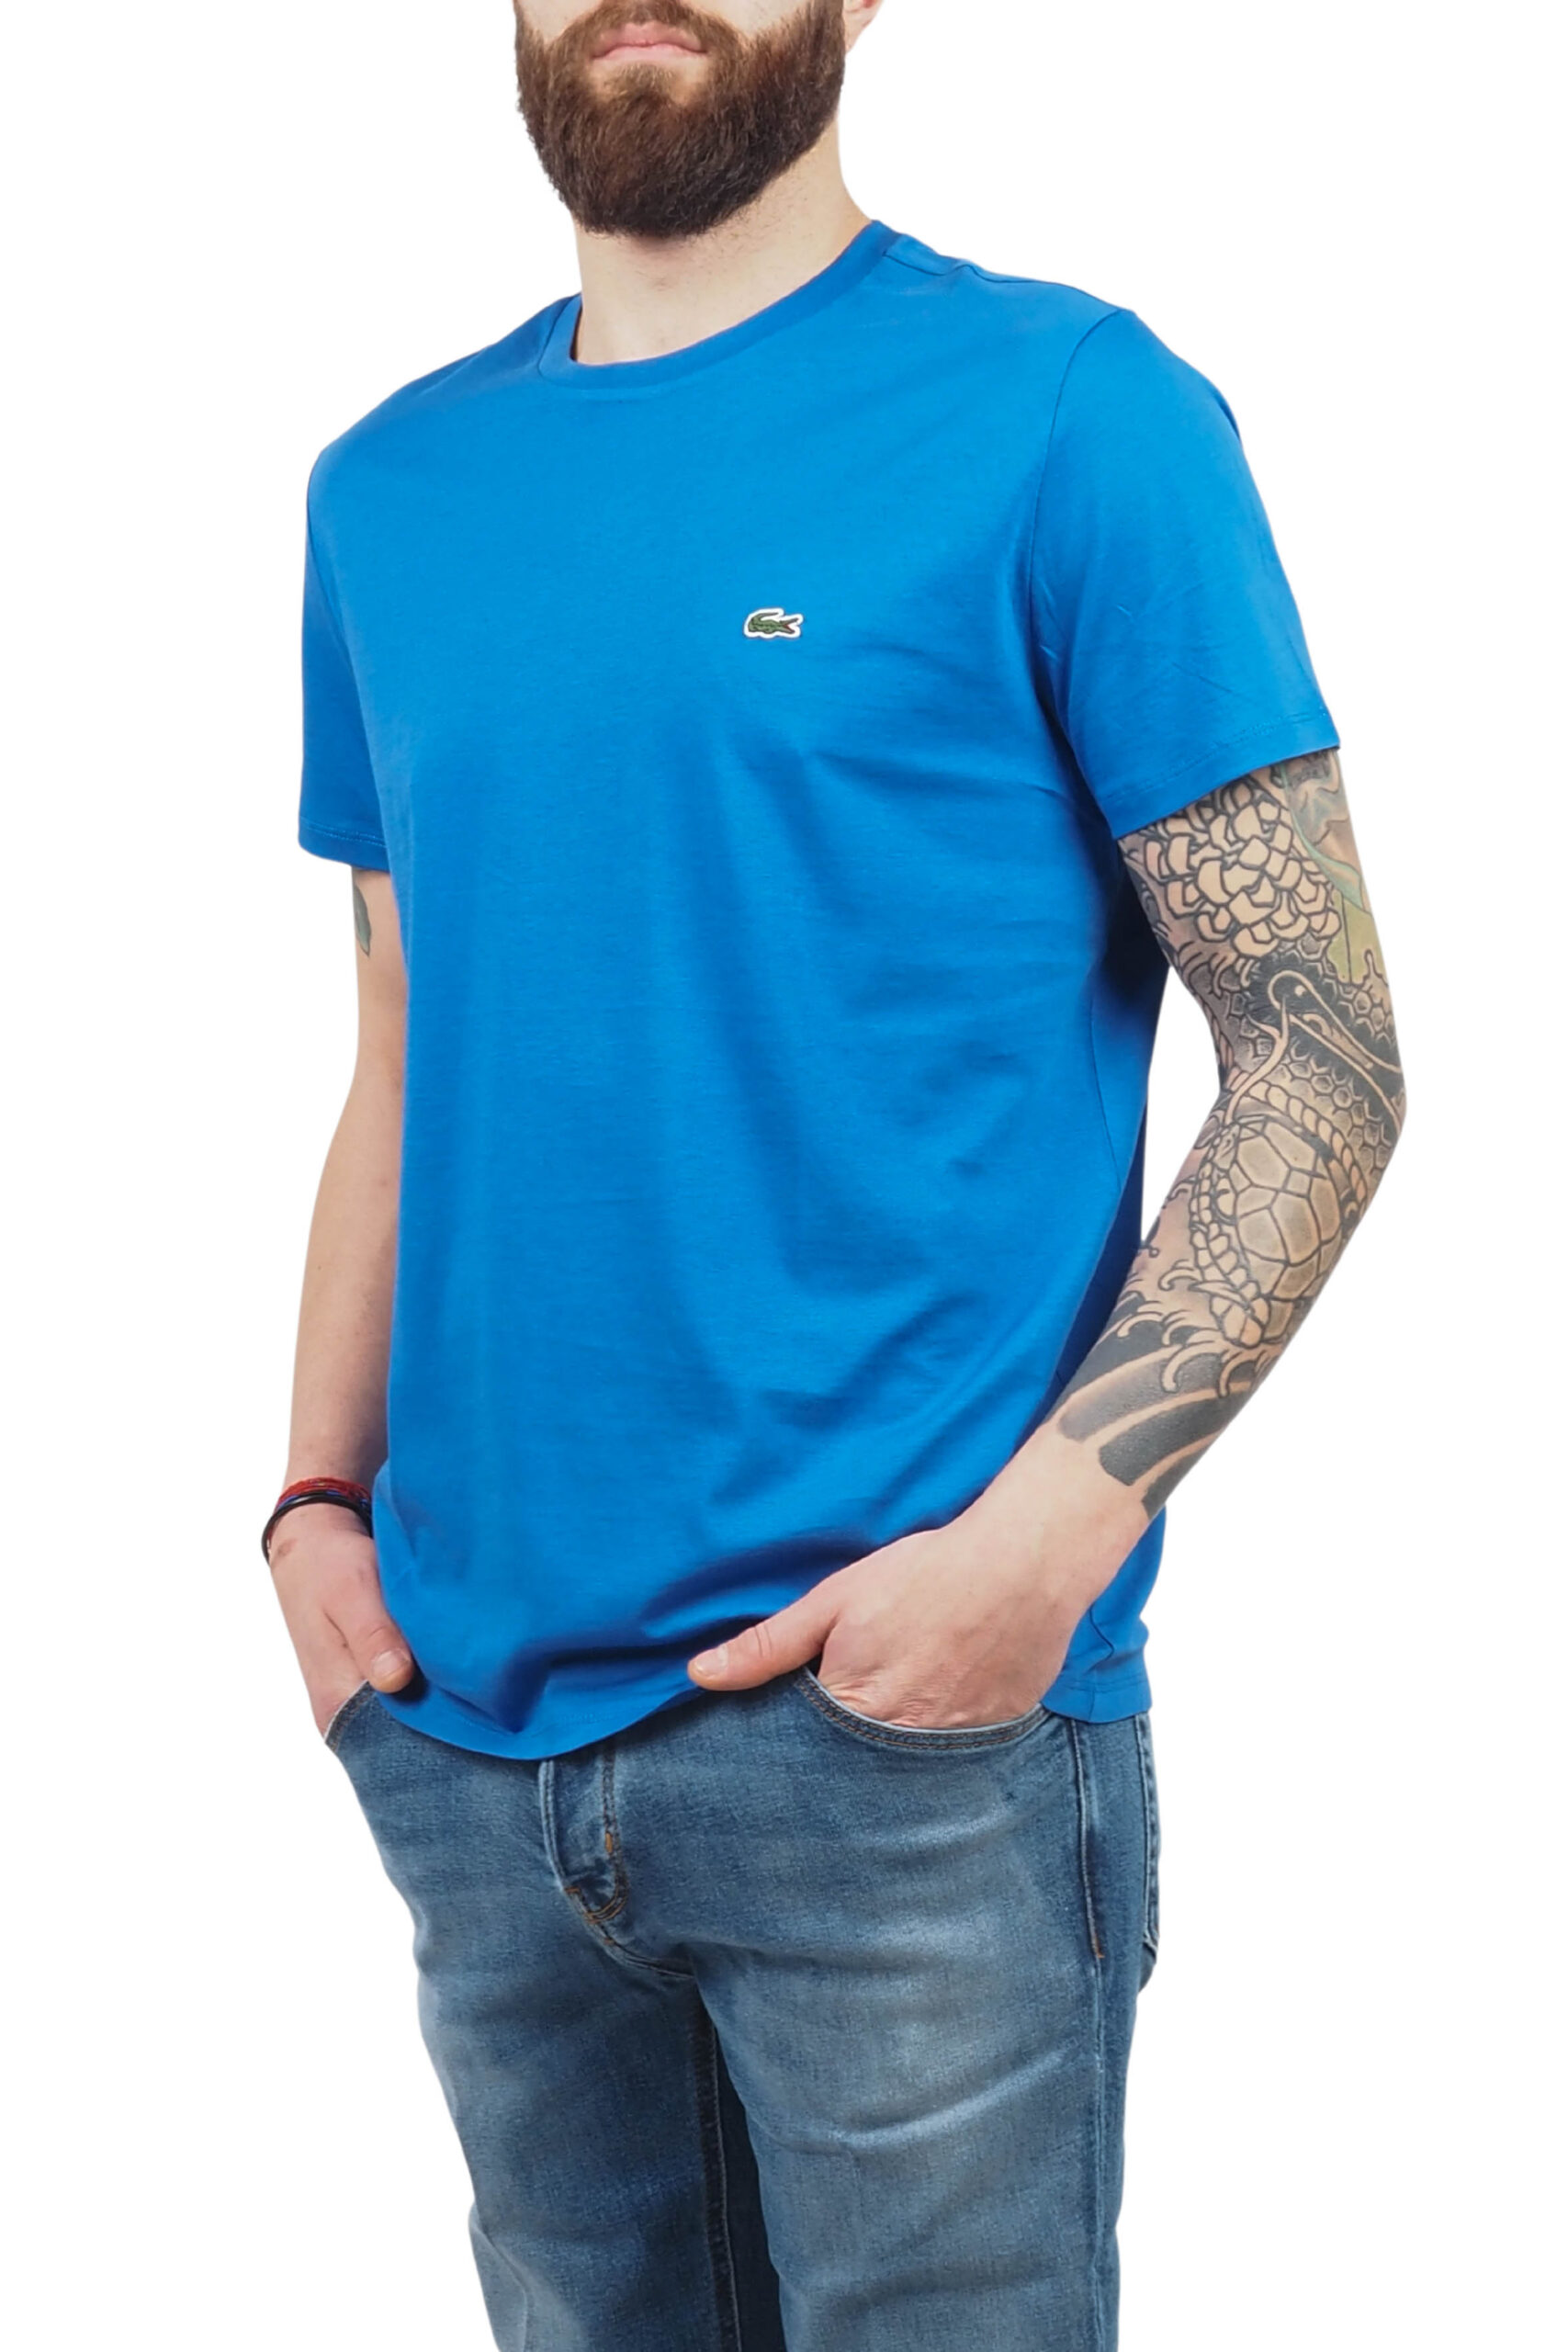 Lacoste-t-shirt-azzurra-uomo